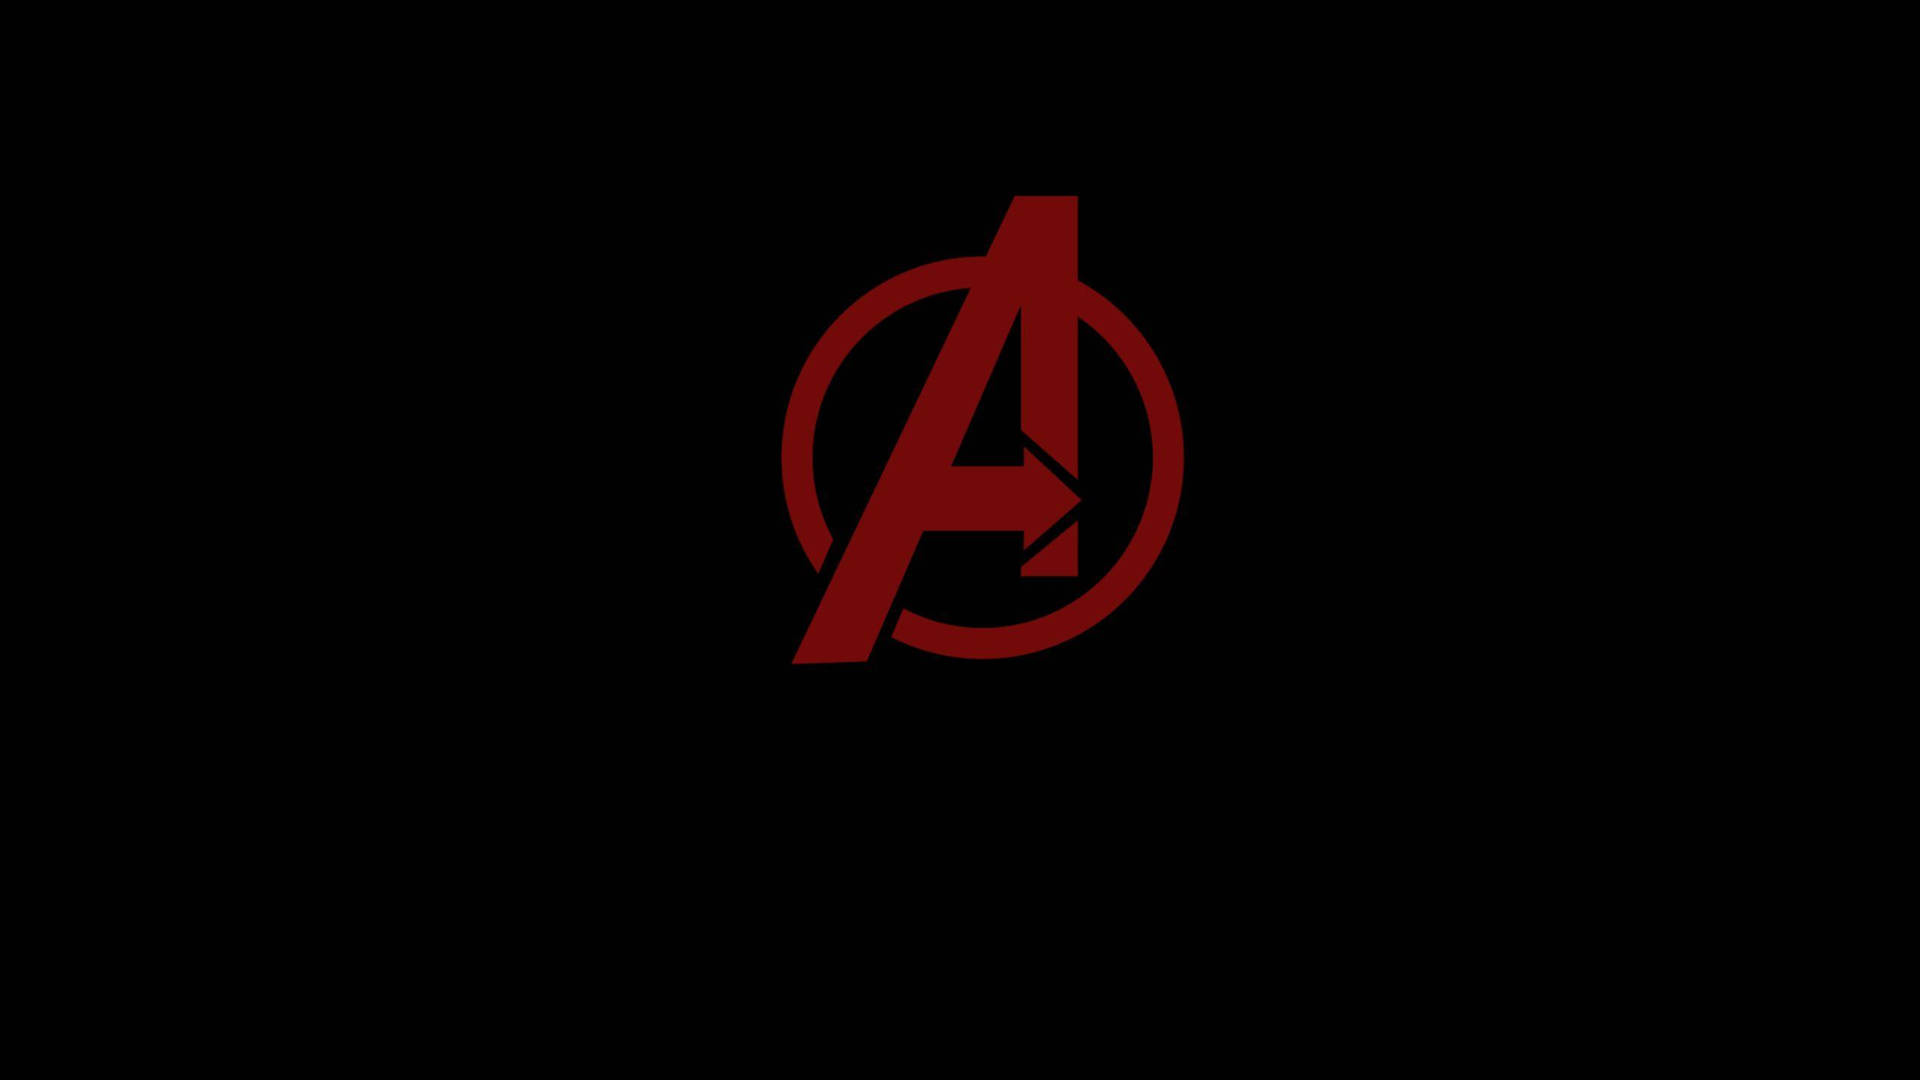 The Red Avengers Logo